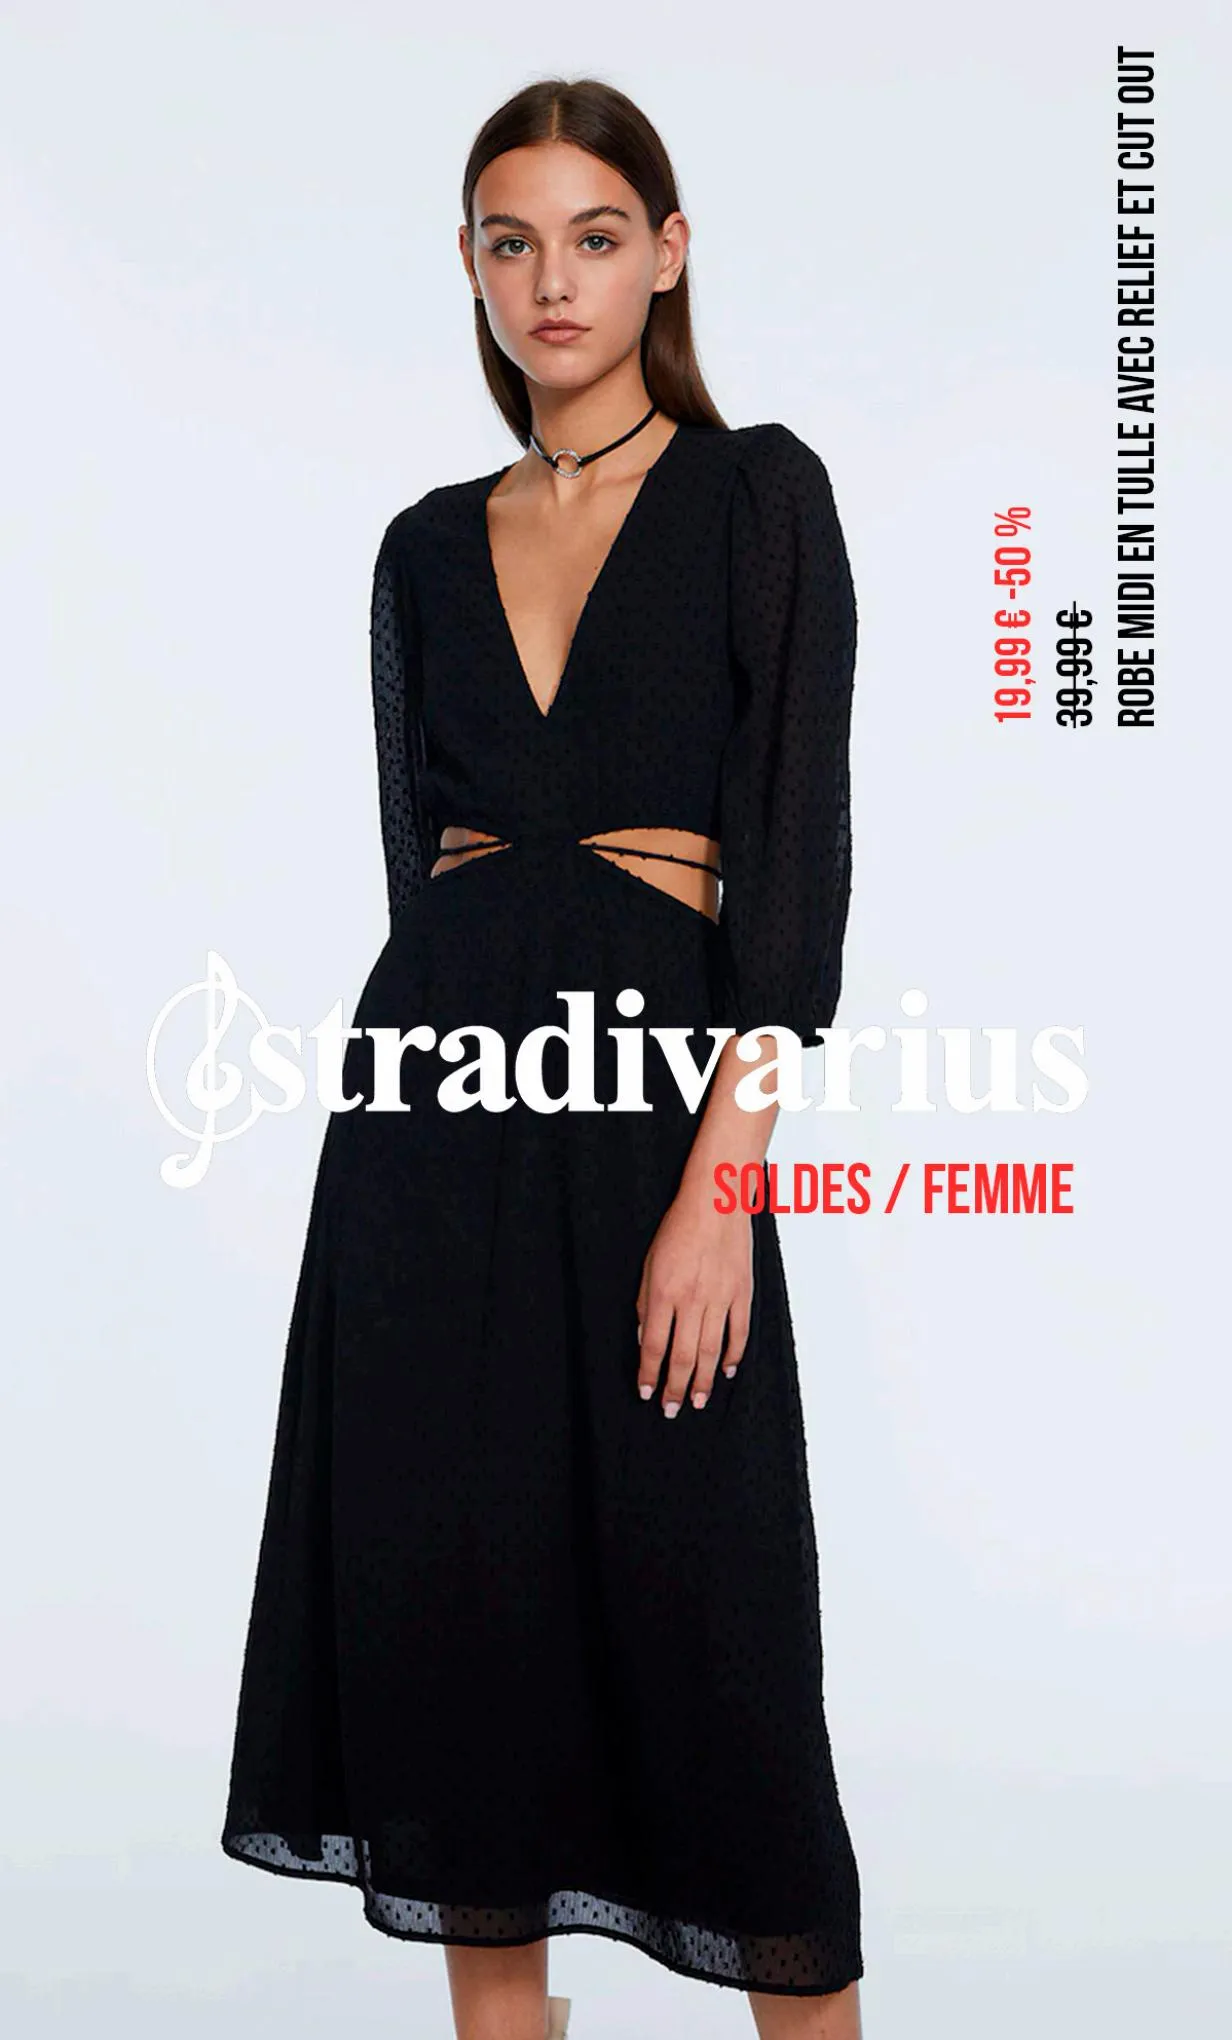 Catalogue Soldes / Femme, page 00001